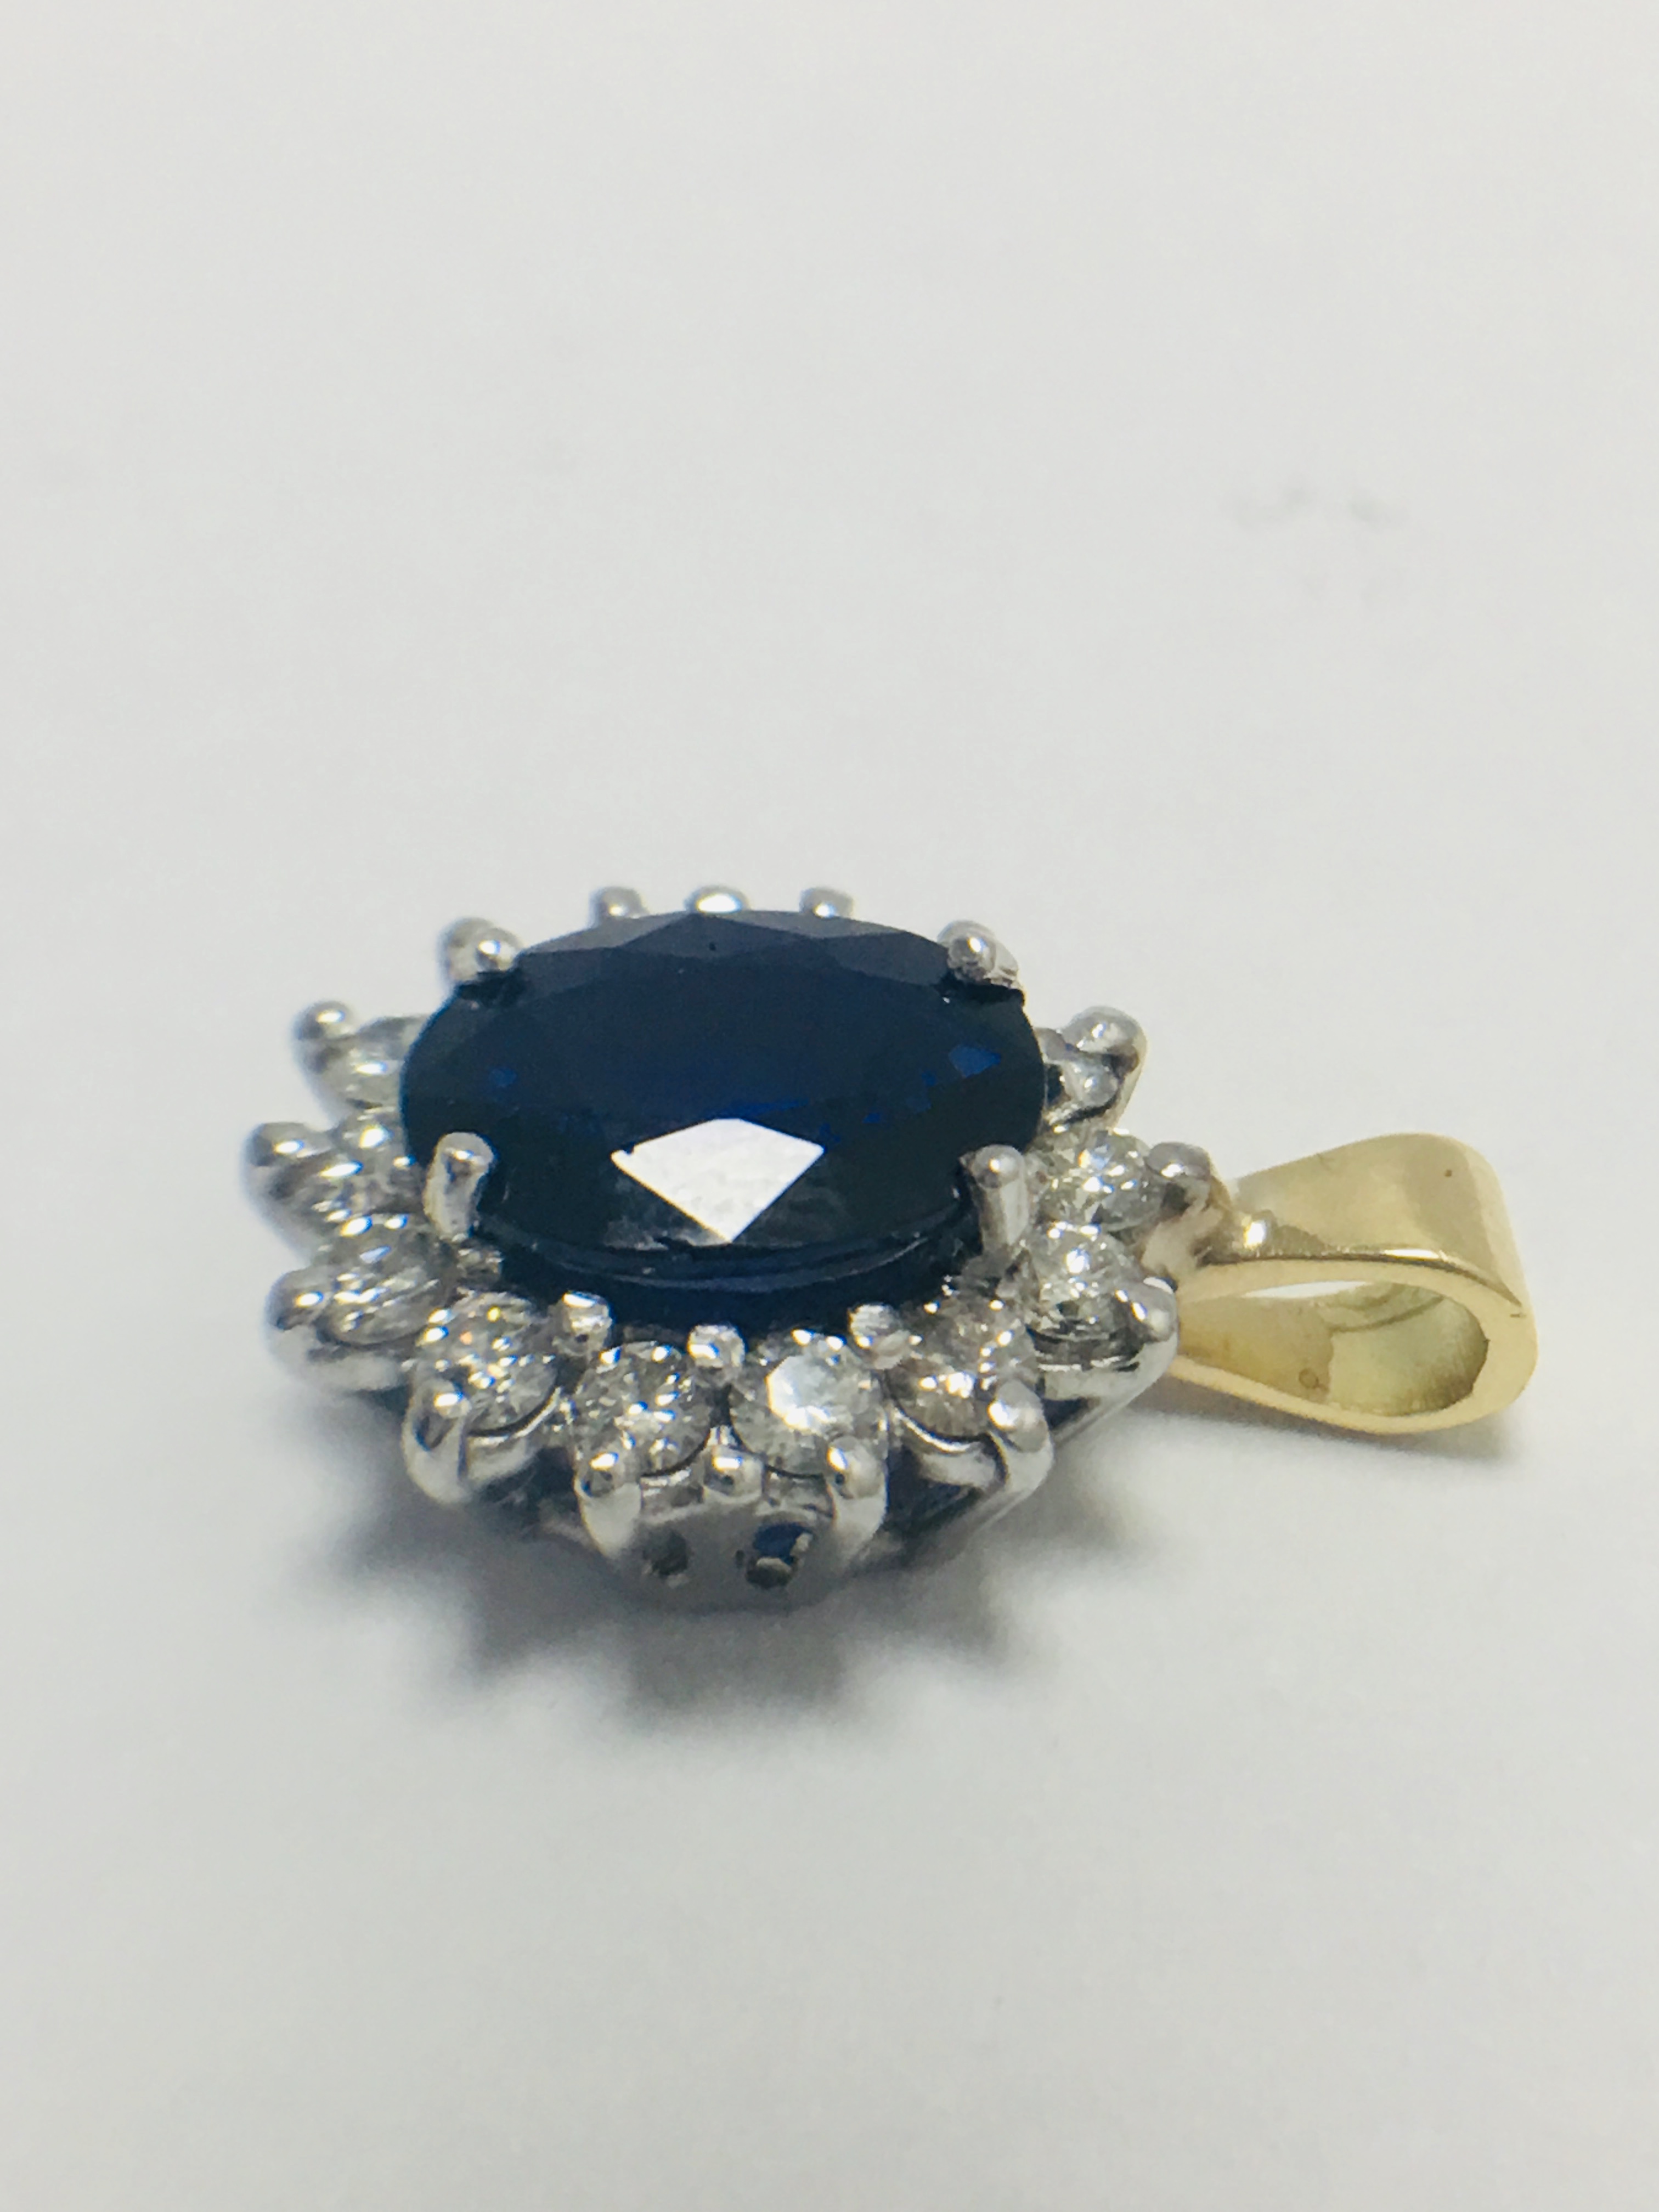 Sapphire and Diamond Pendant,18ct Gold - Image 6 of 7